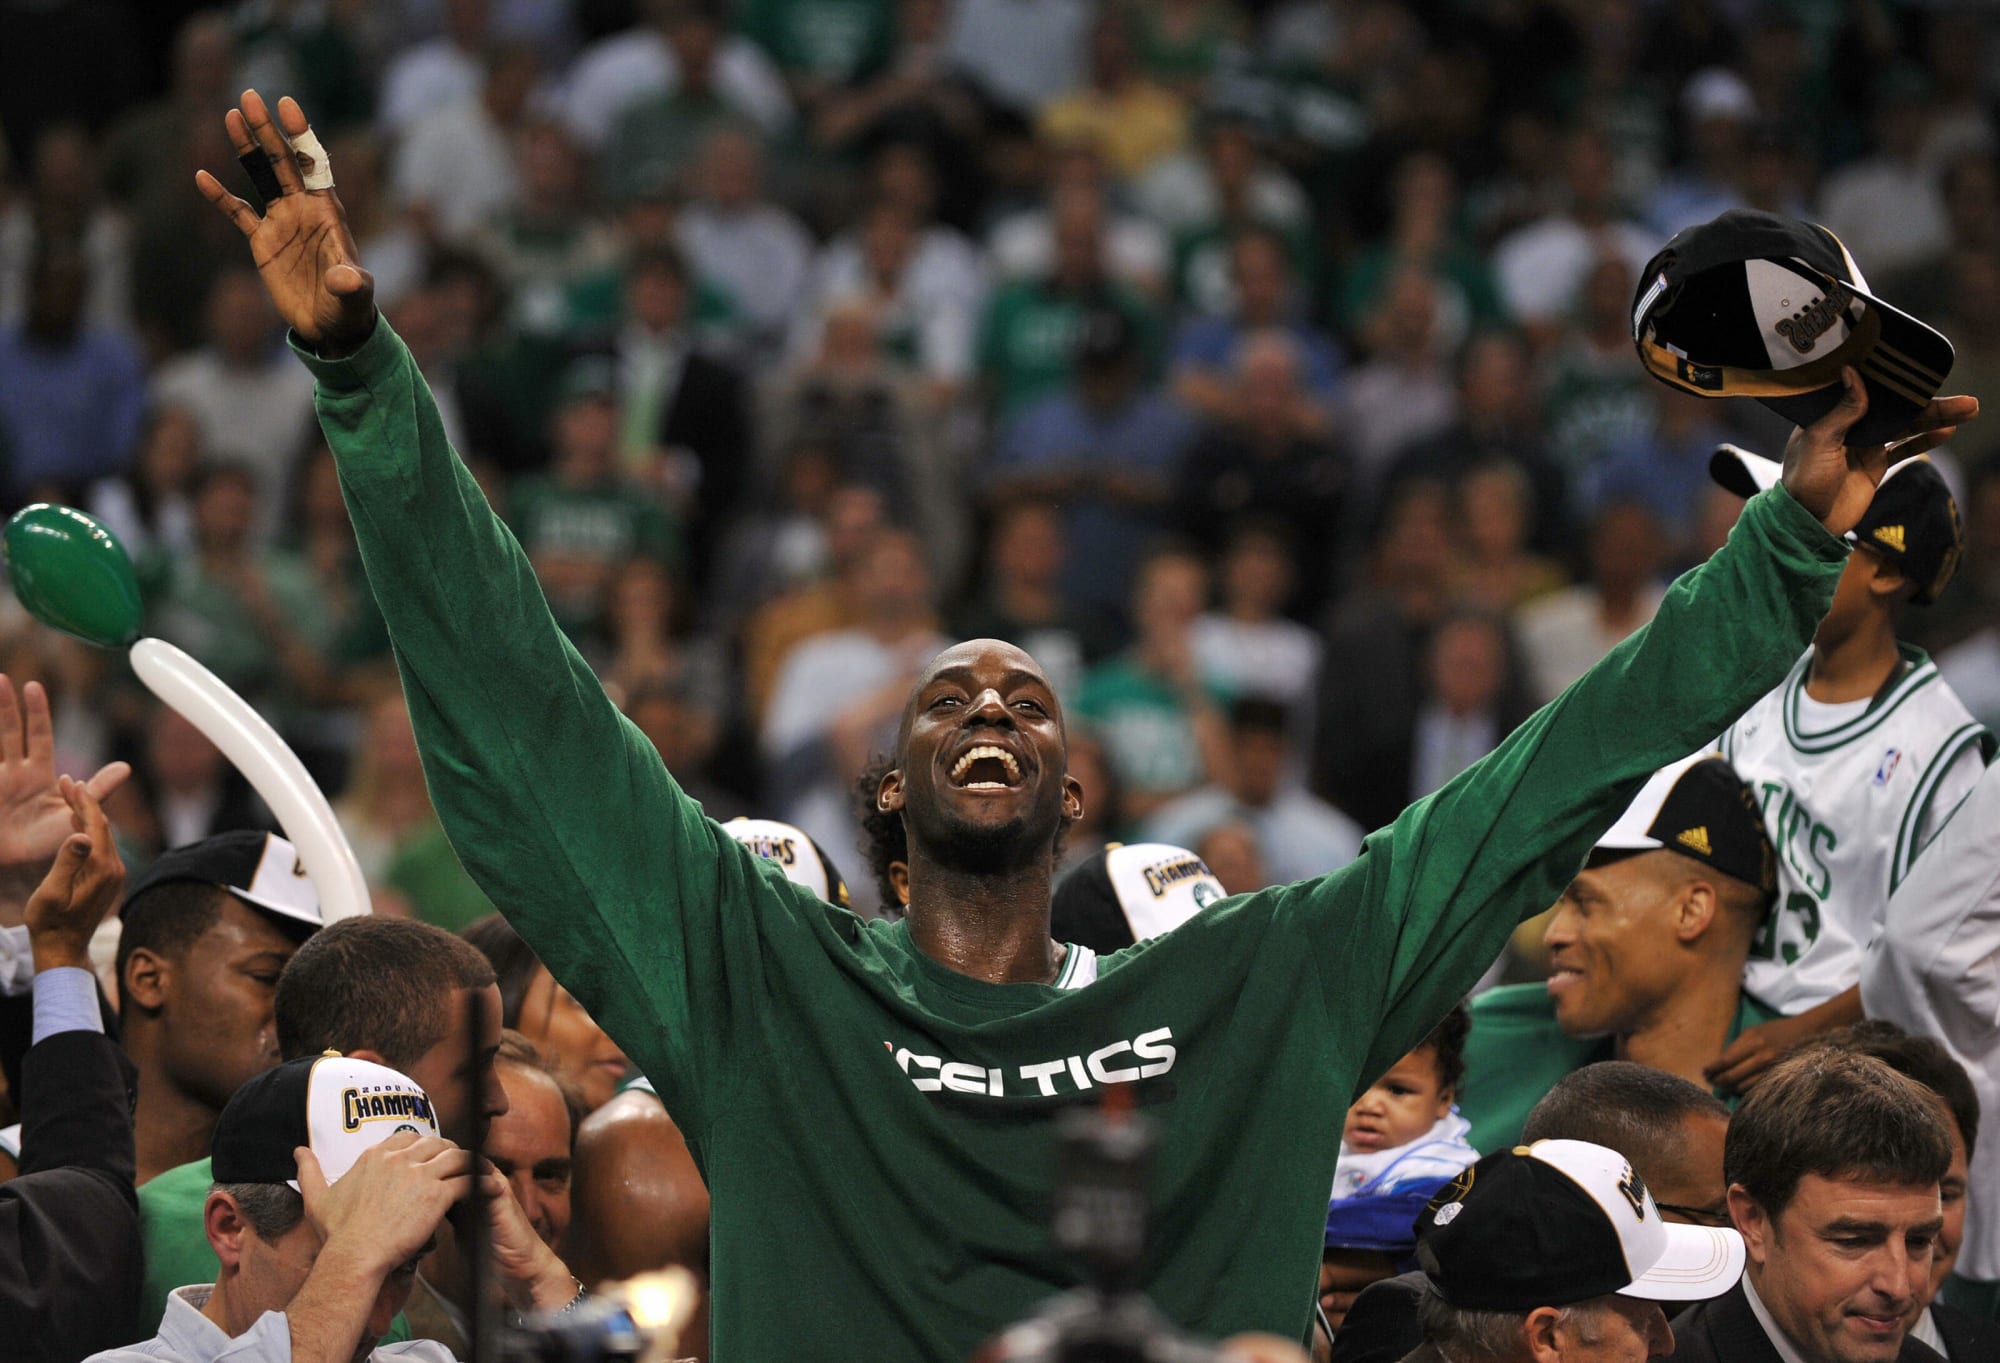 WATCH: Should the Boston Celtics retire Kevin Garnett's number?